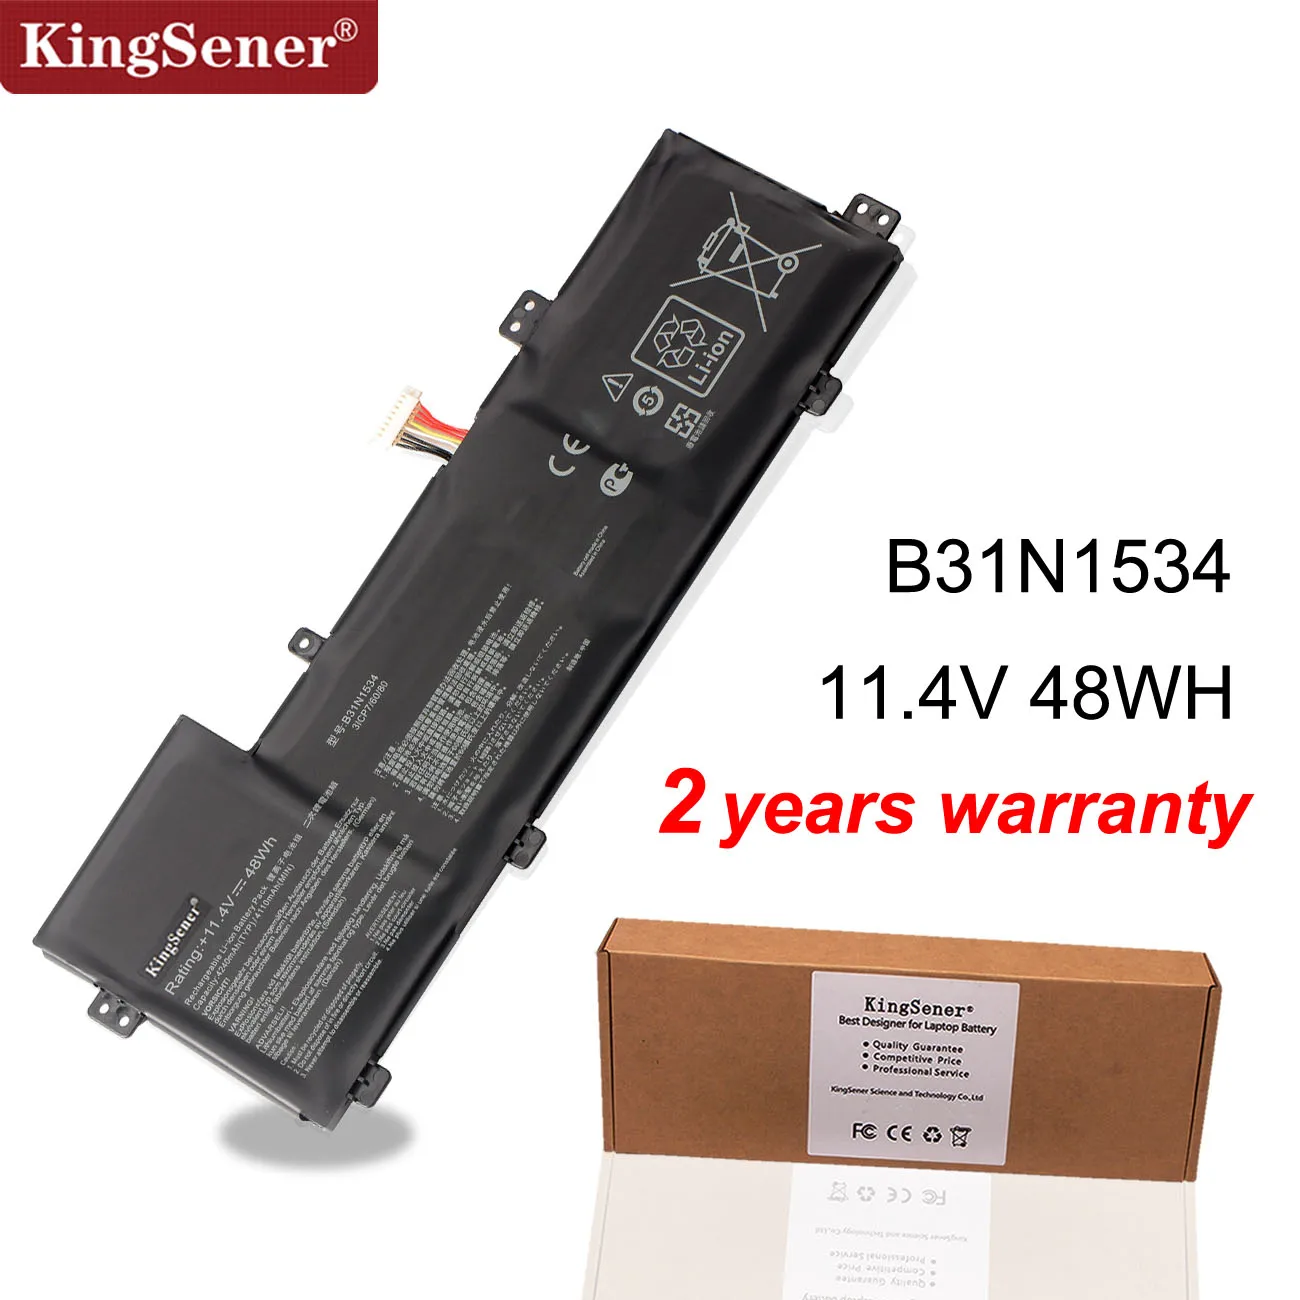 KingSener B31N1534 Аккумулятор для ноутбука Asus Zenbook UX510 UX510UW UX510UX серии 3ICP7/60/80 0B200-02030000 11,4 V 48WH